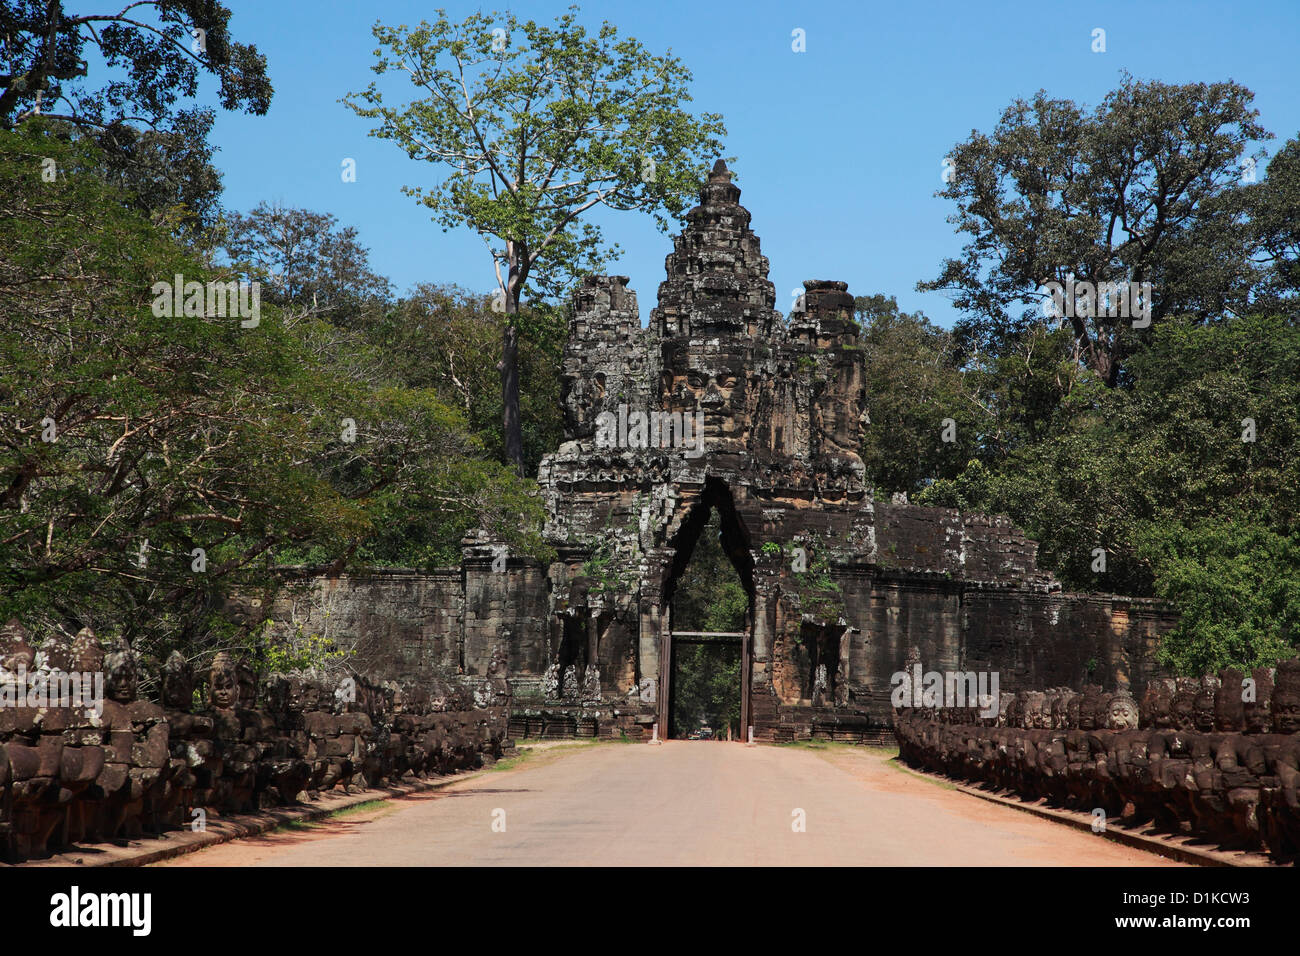 Entrance to Angkor Wat, Cambodia Stock Photo